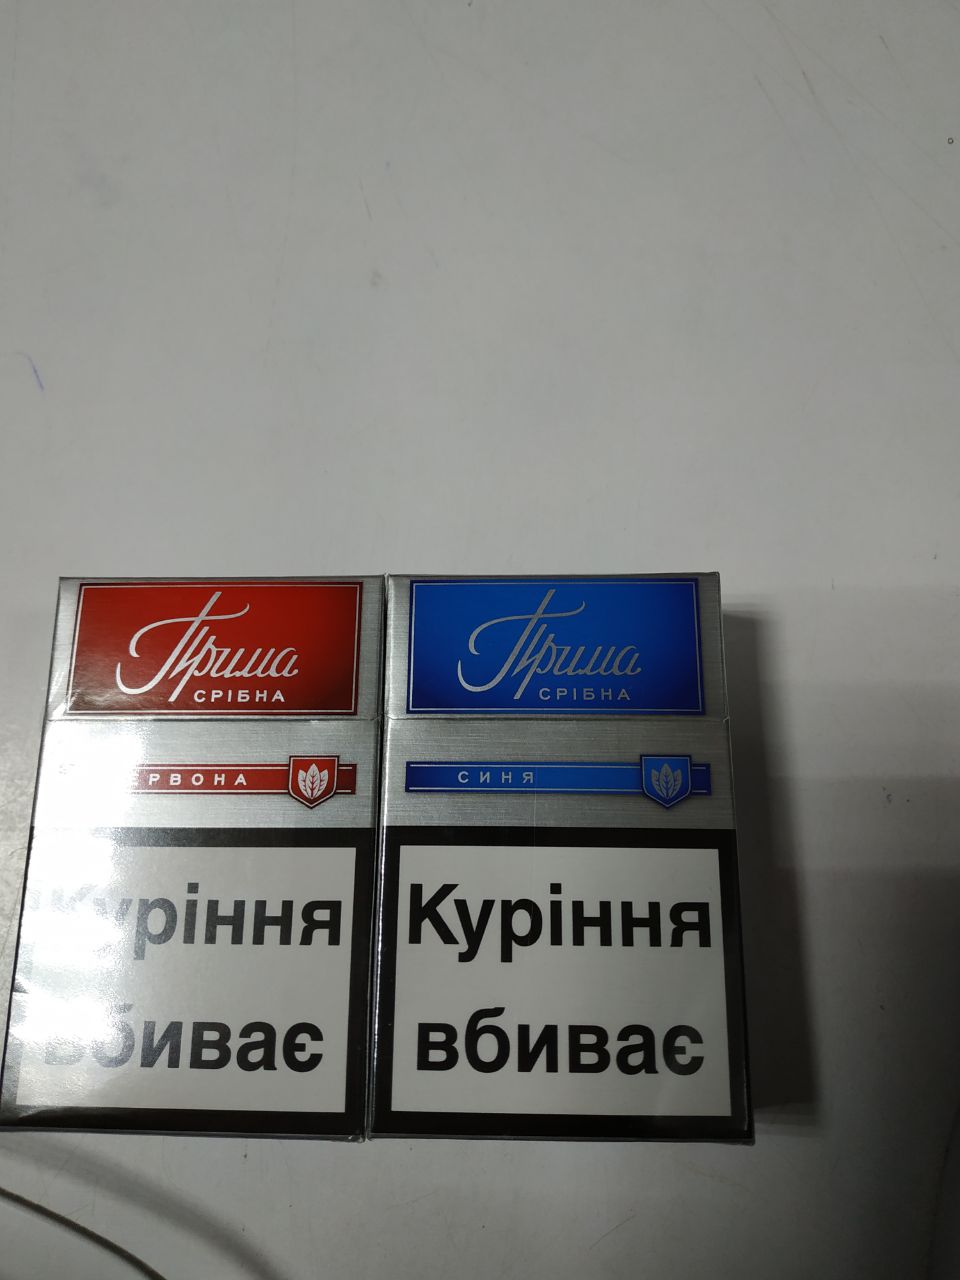 Украинские марки сигарет